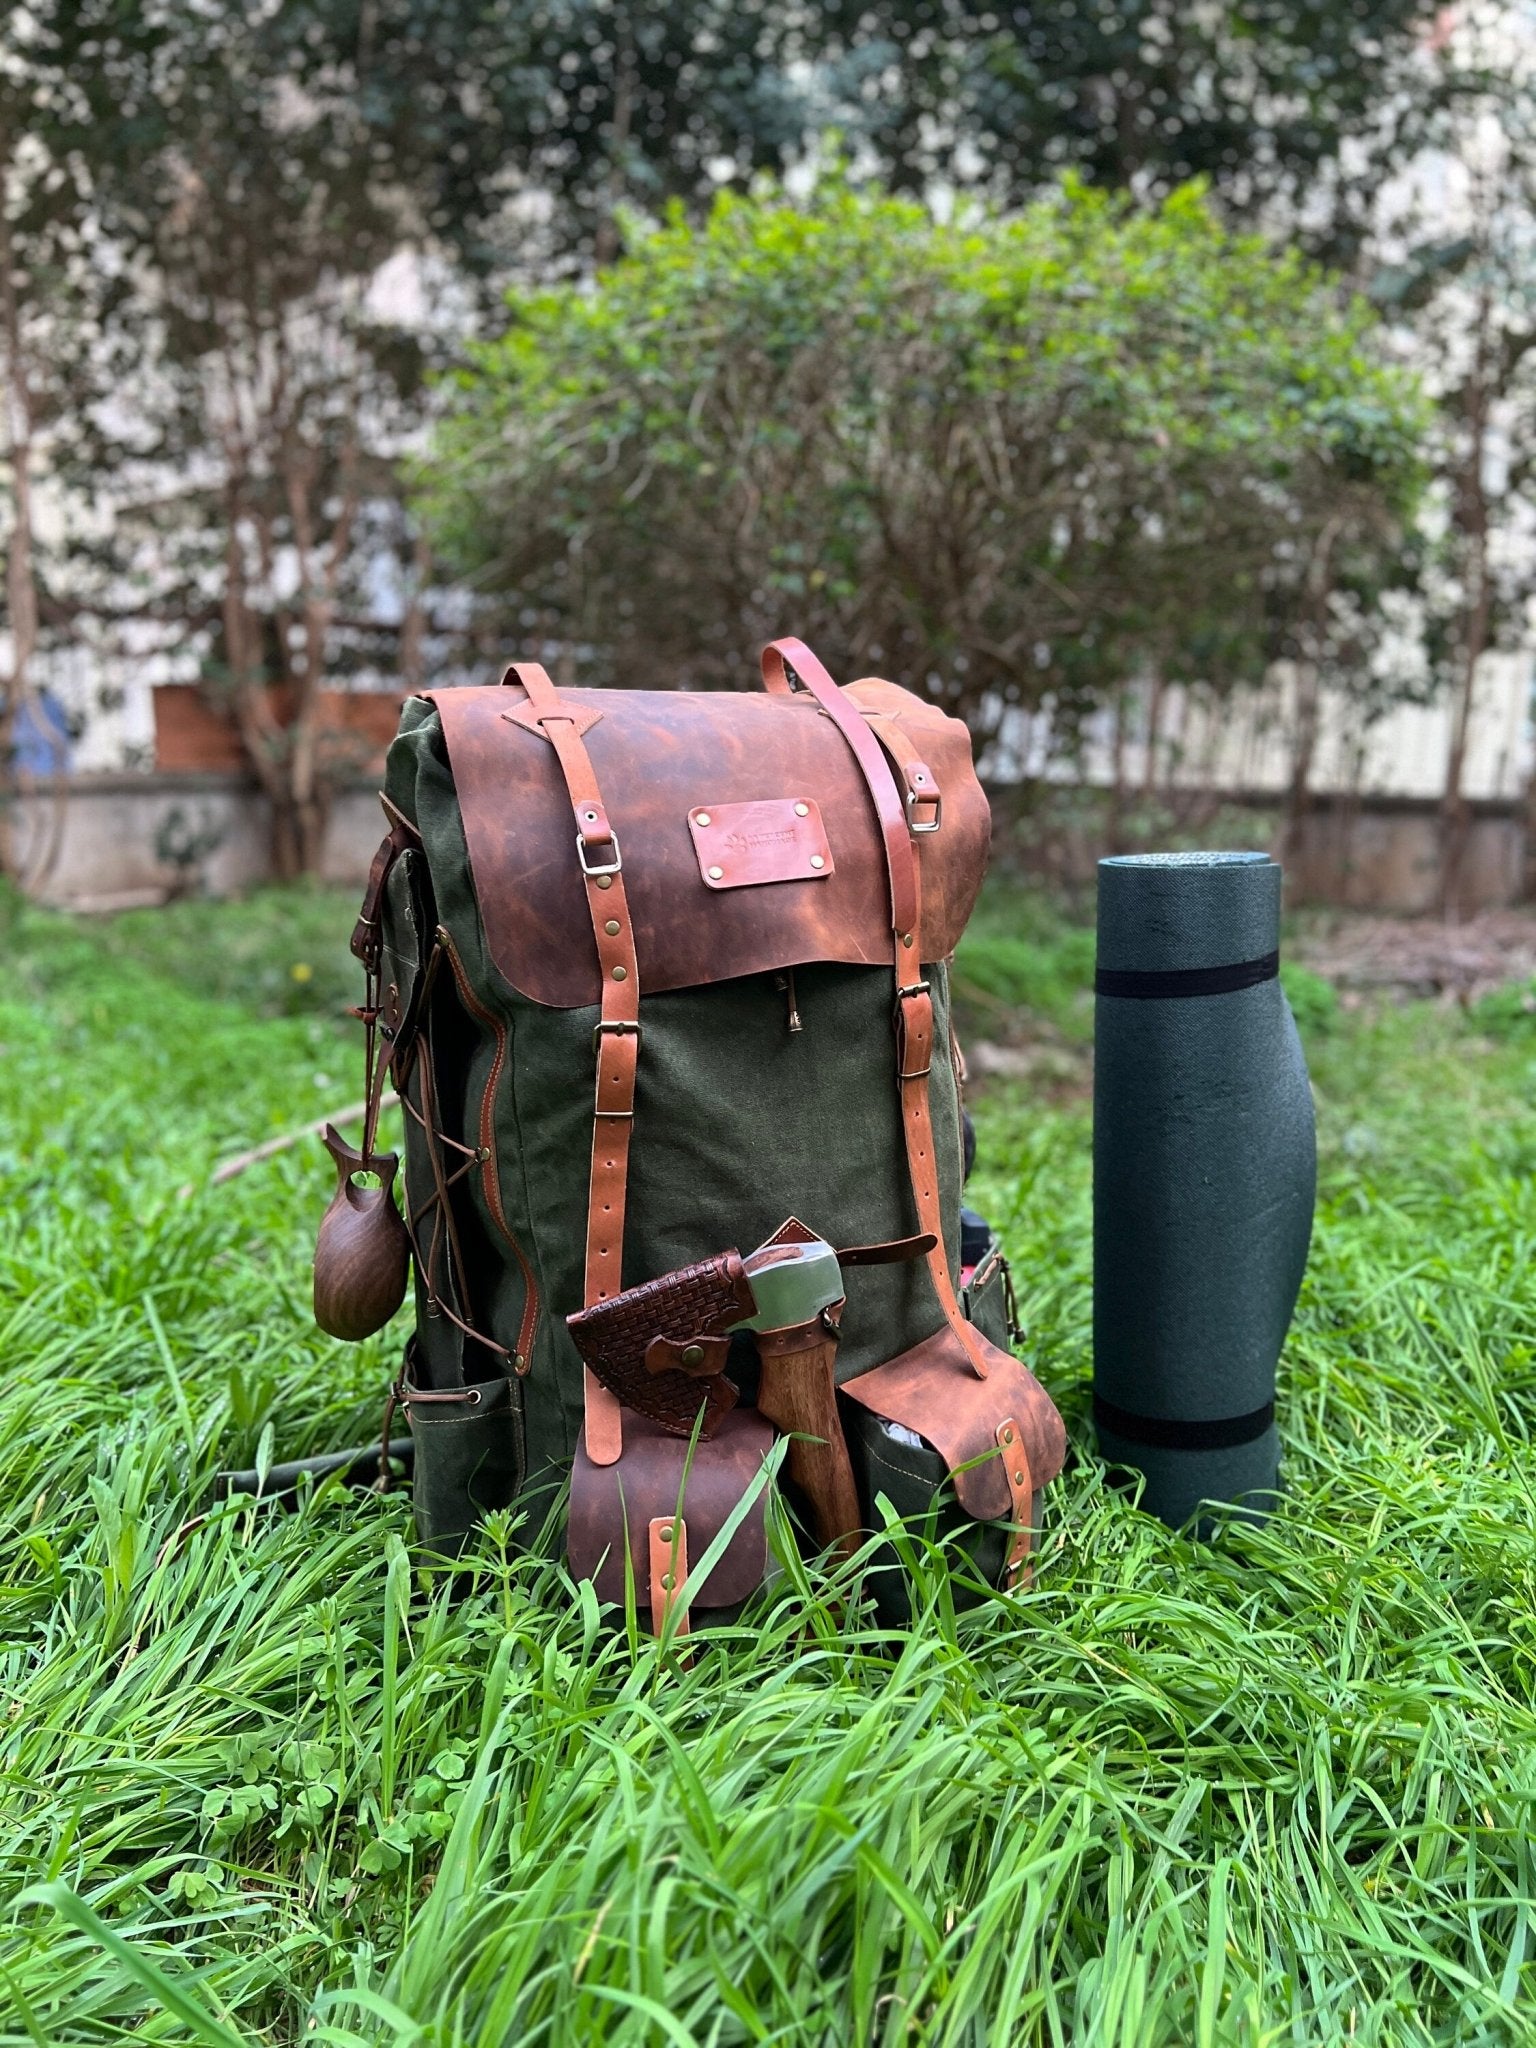 80L - 70L - 60L - 50L | Backpack | Black, Brown, Green | Camping Backpack | Bushcraft Backpack | Travel Backpack  Outdoor Backpack  99percenthandmade   